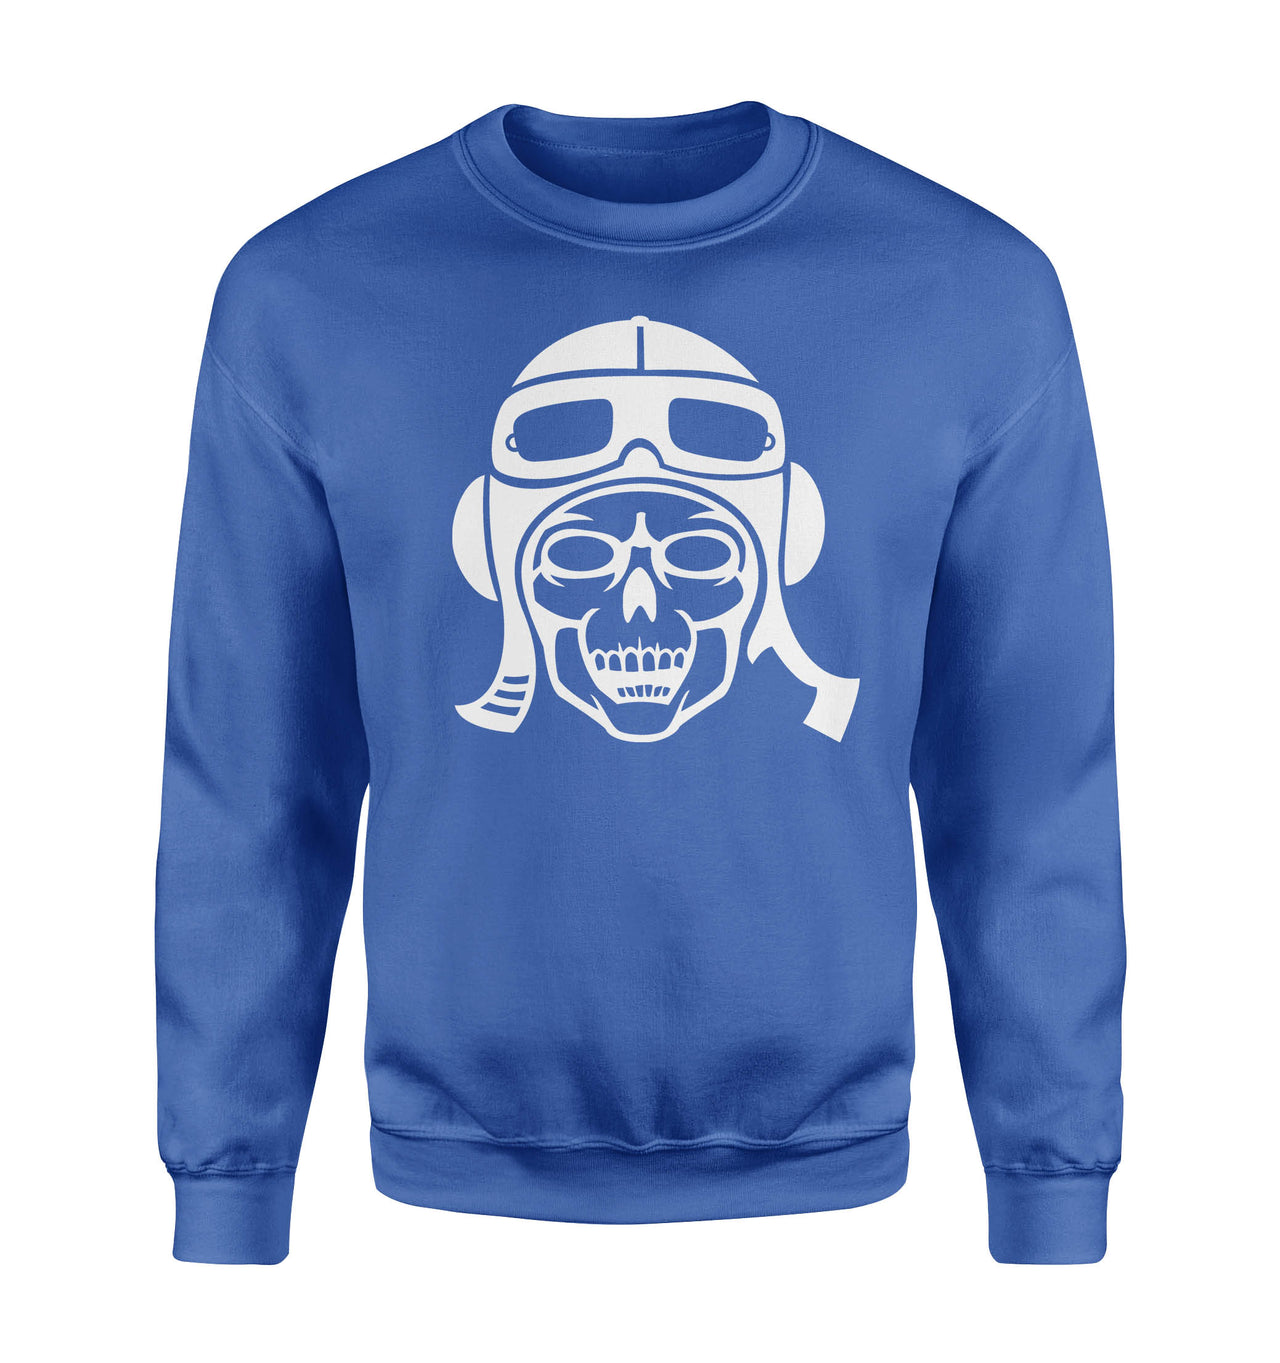 Skeleton Pilot Silhouette Designed Sweatshirts